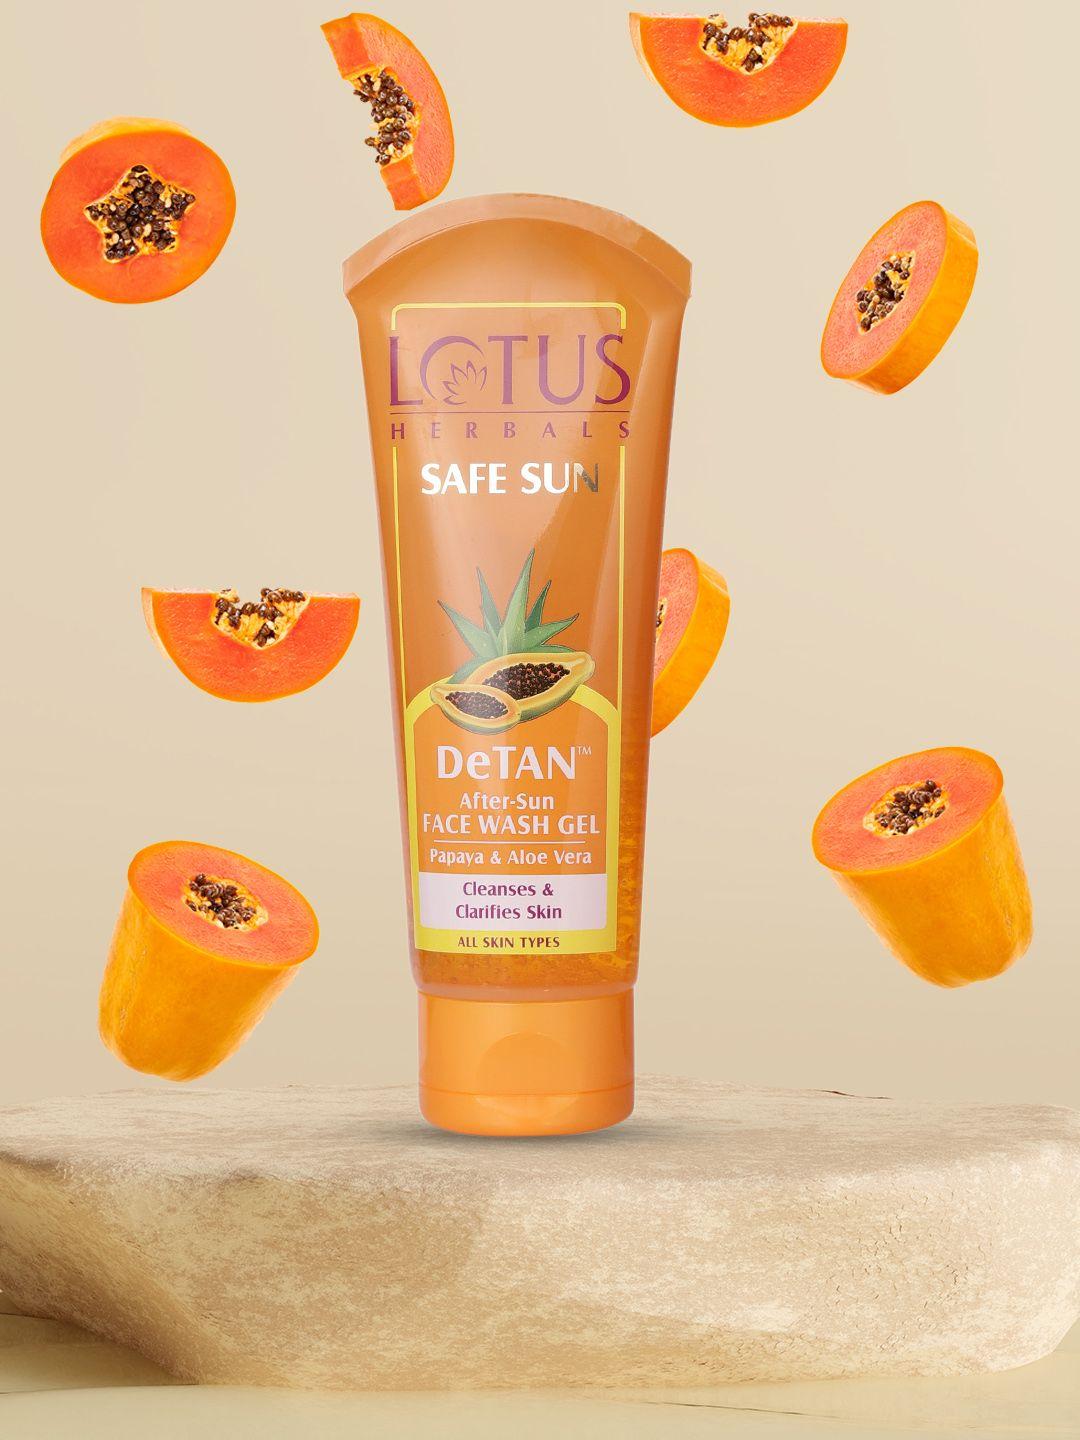 lotus-herbals-unisex-safe-sun-detan-after-sun-face-wash-gel---100-g